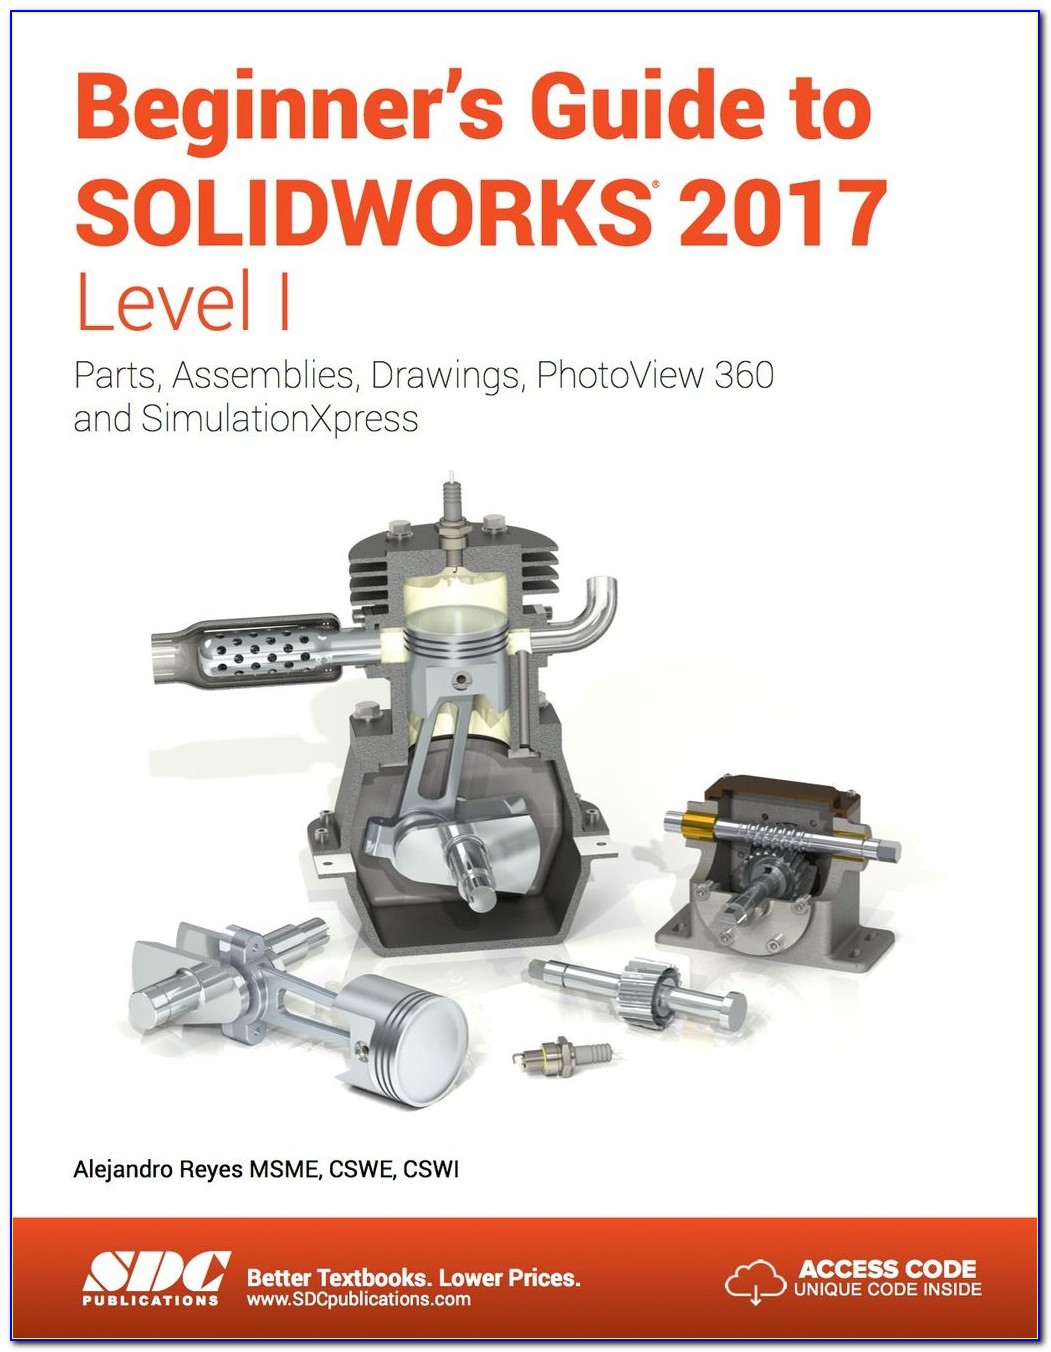 Solidworks Certification Levels